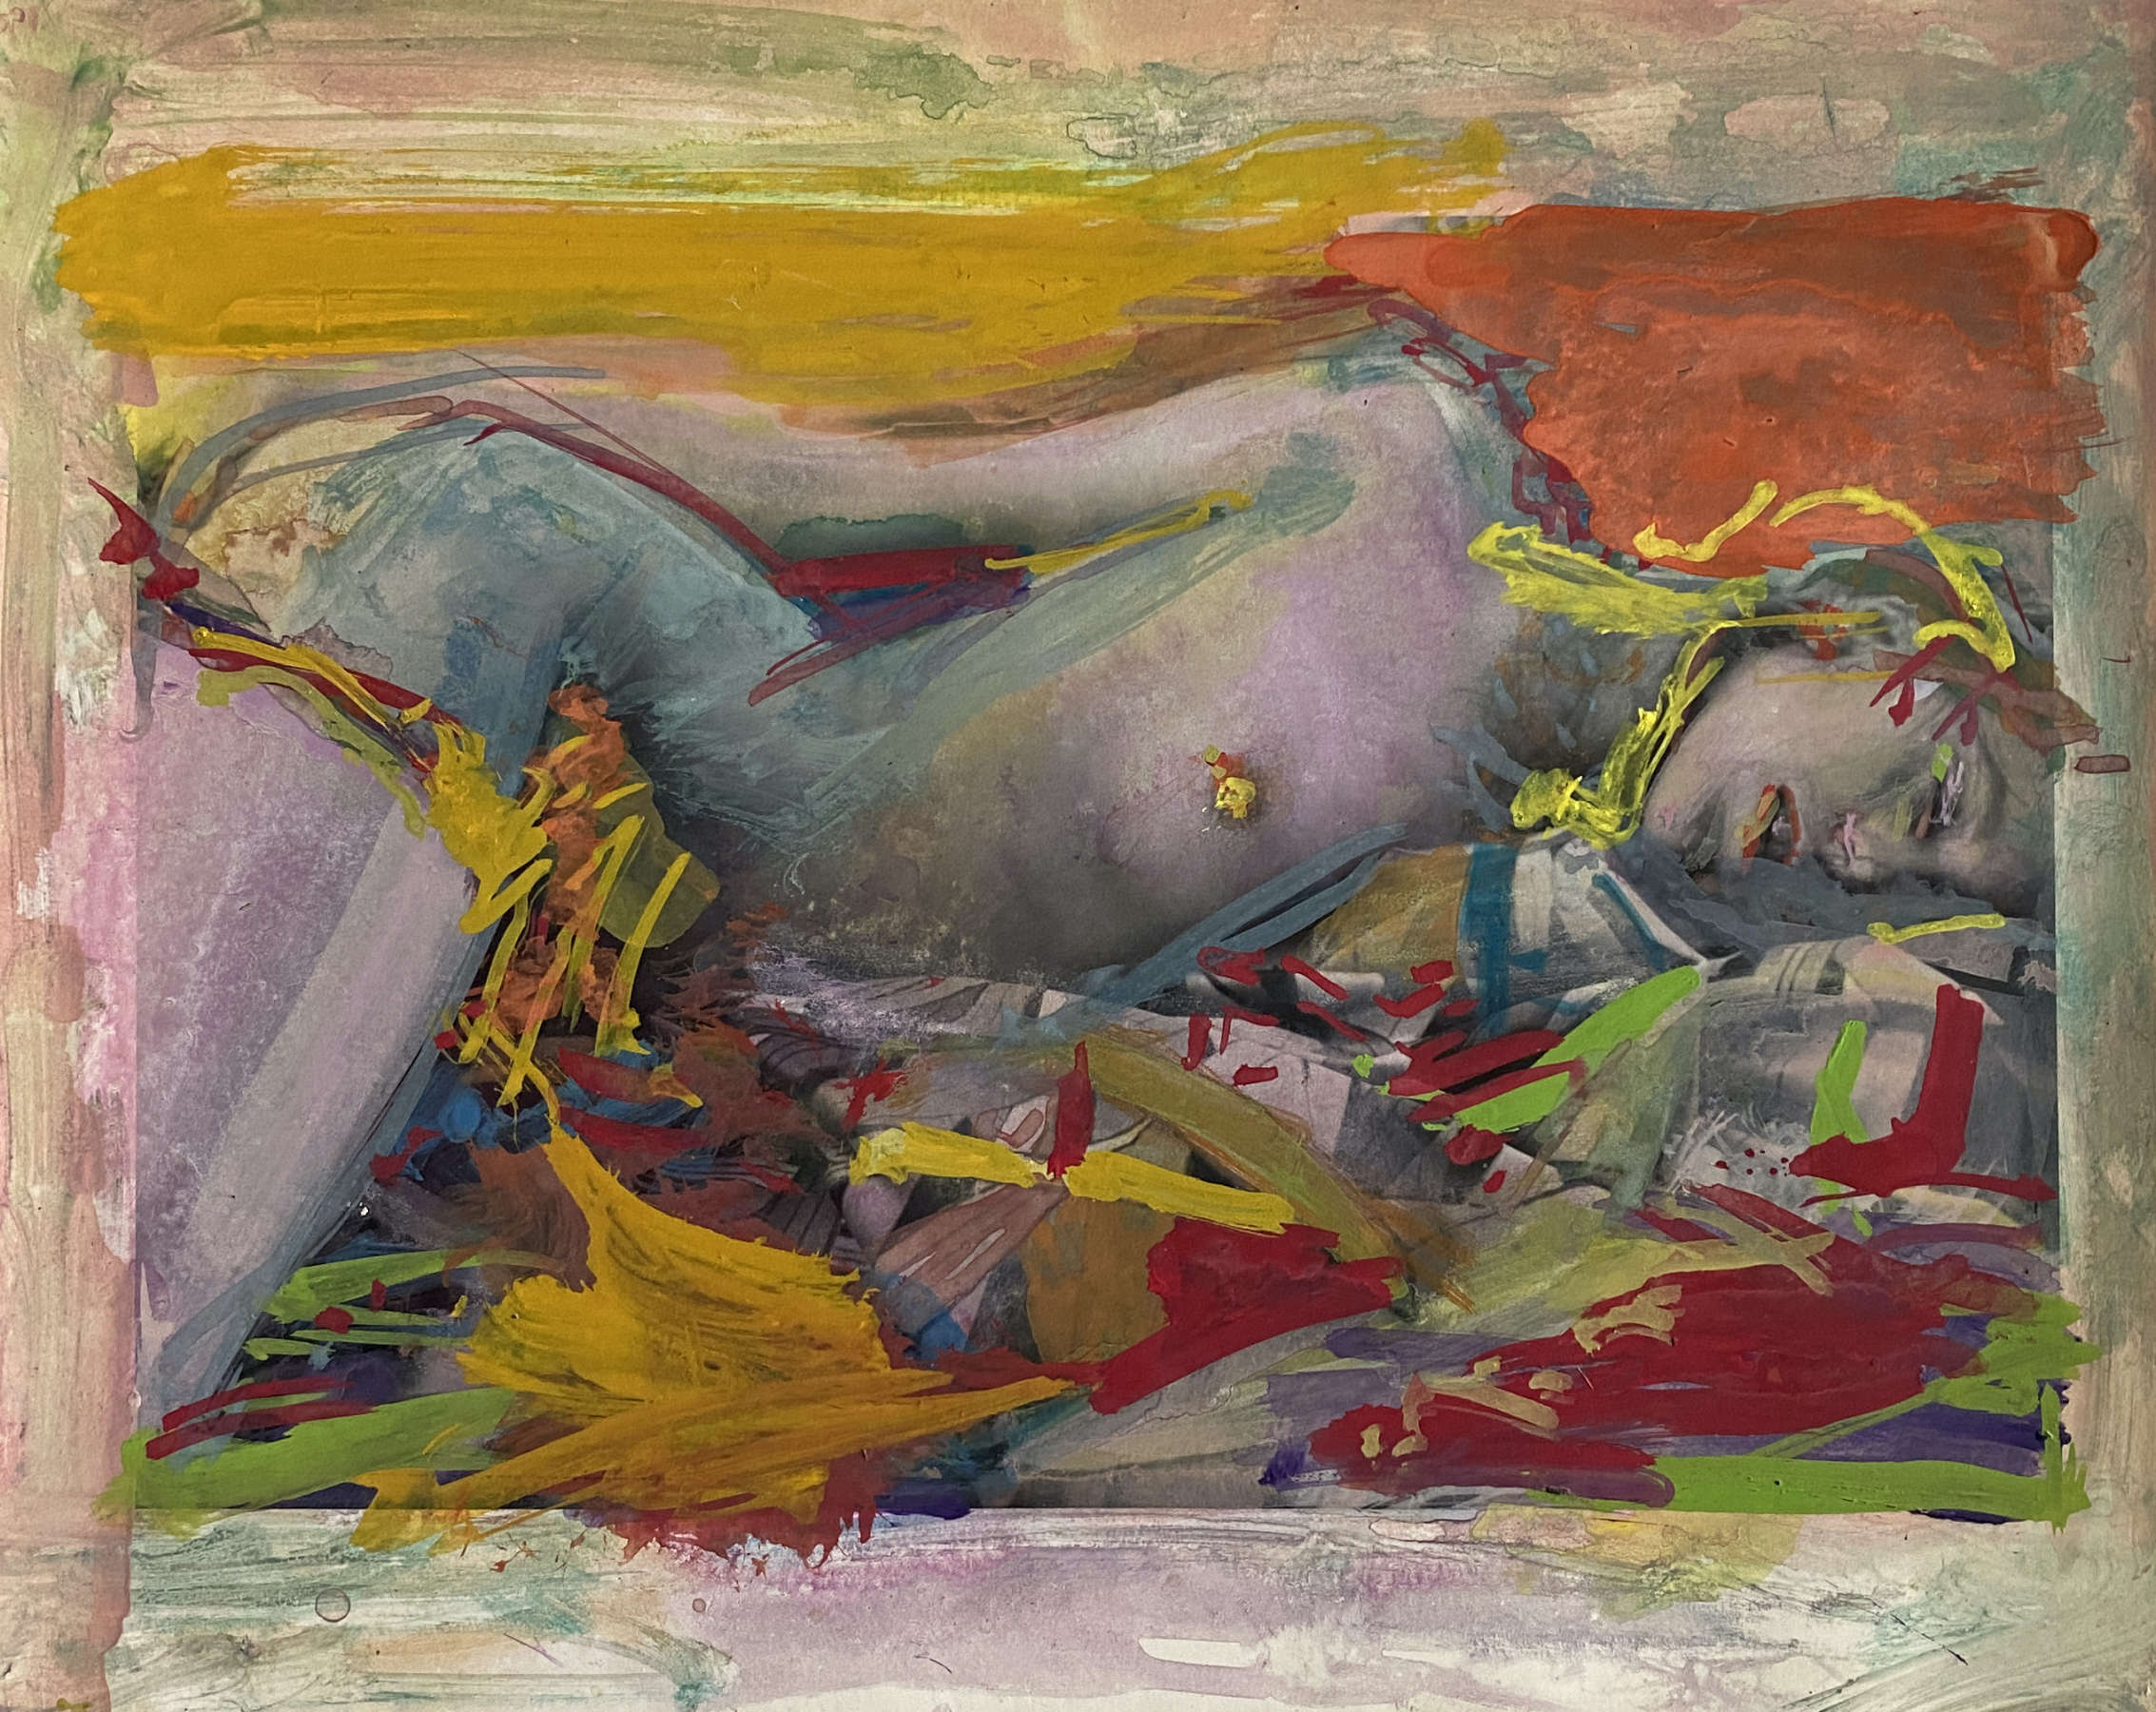 Saul Leiter: Painted Nudes, Unaltd (0134351), 1970s - 1990s